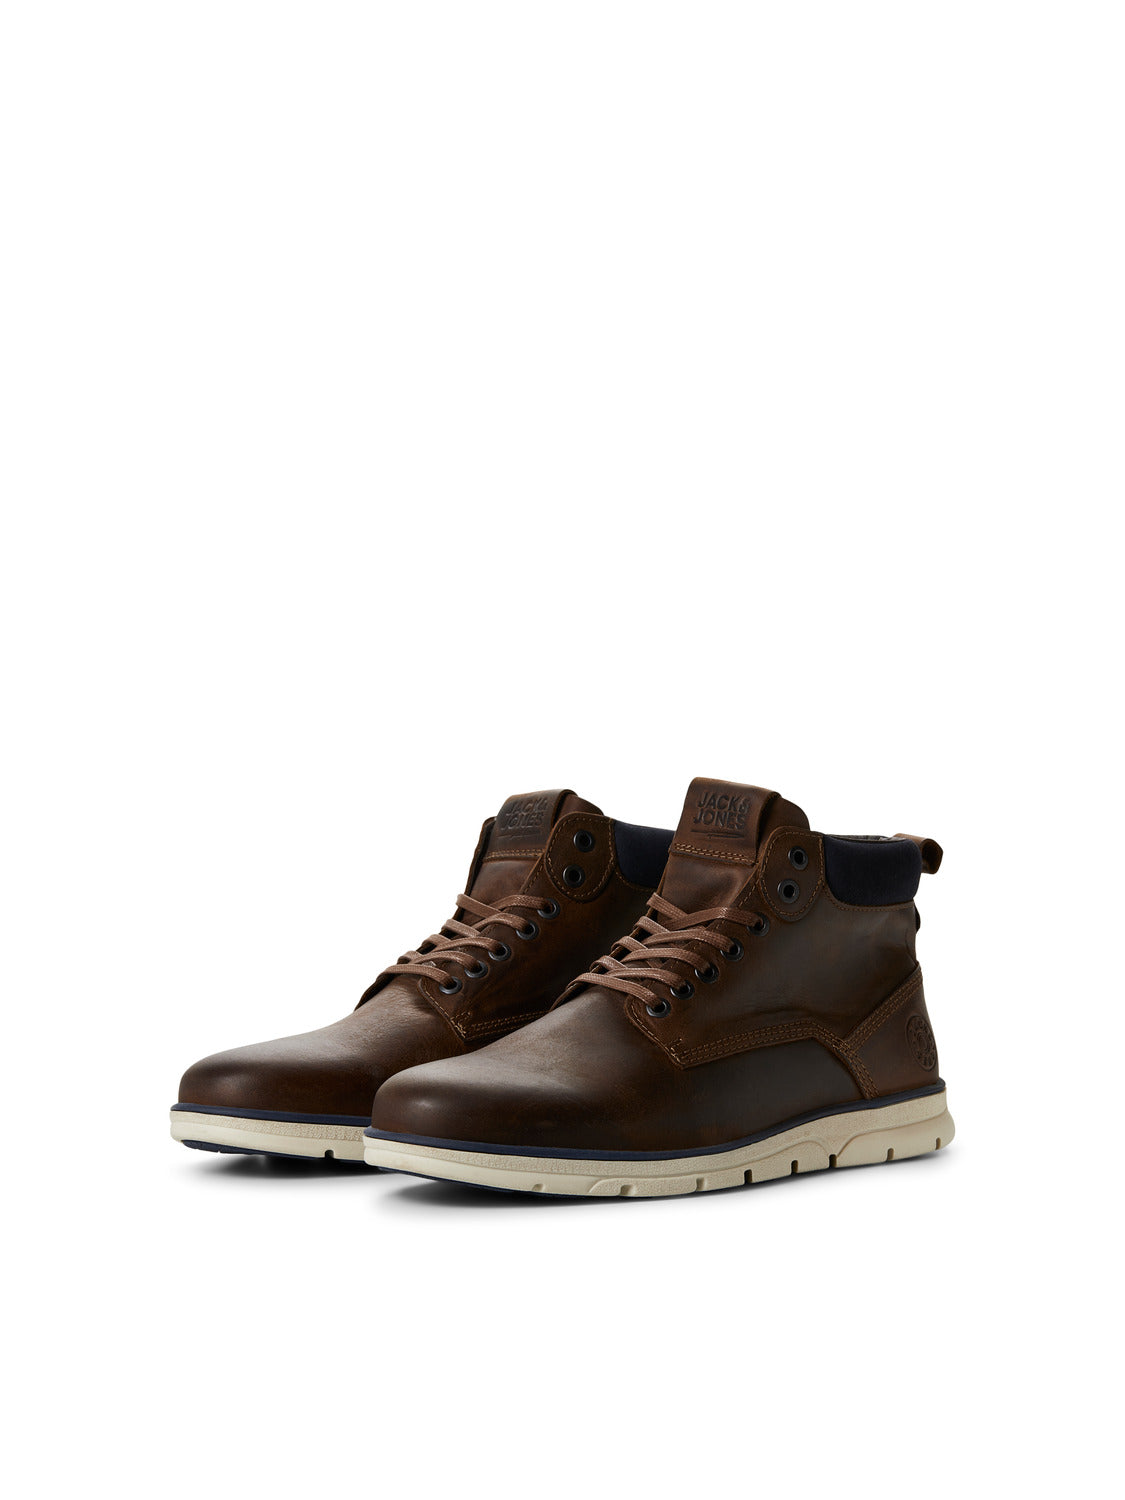 JFWTUBAR Boots - brandy brown